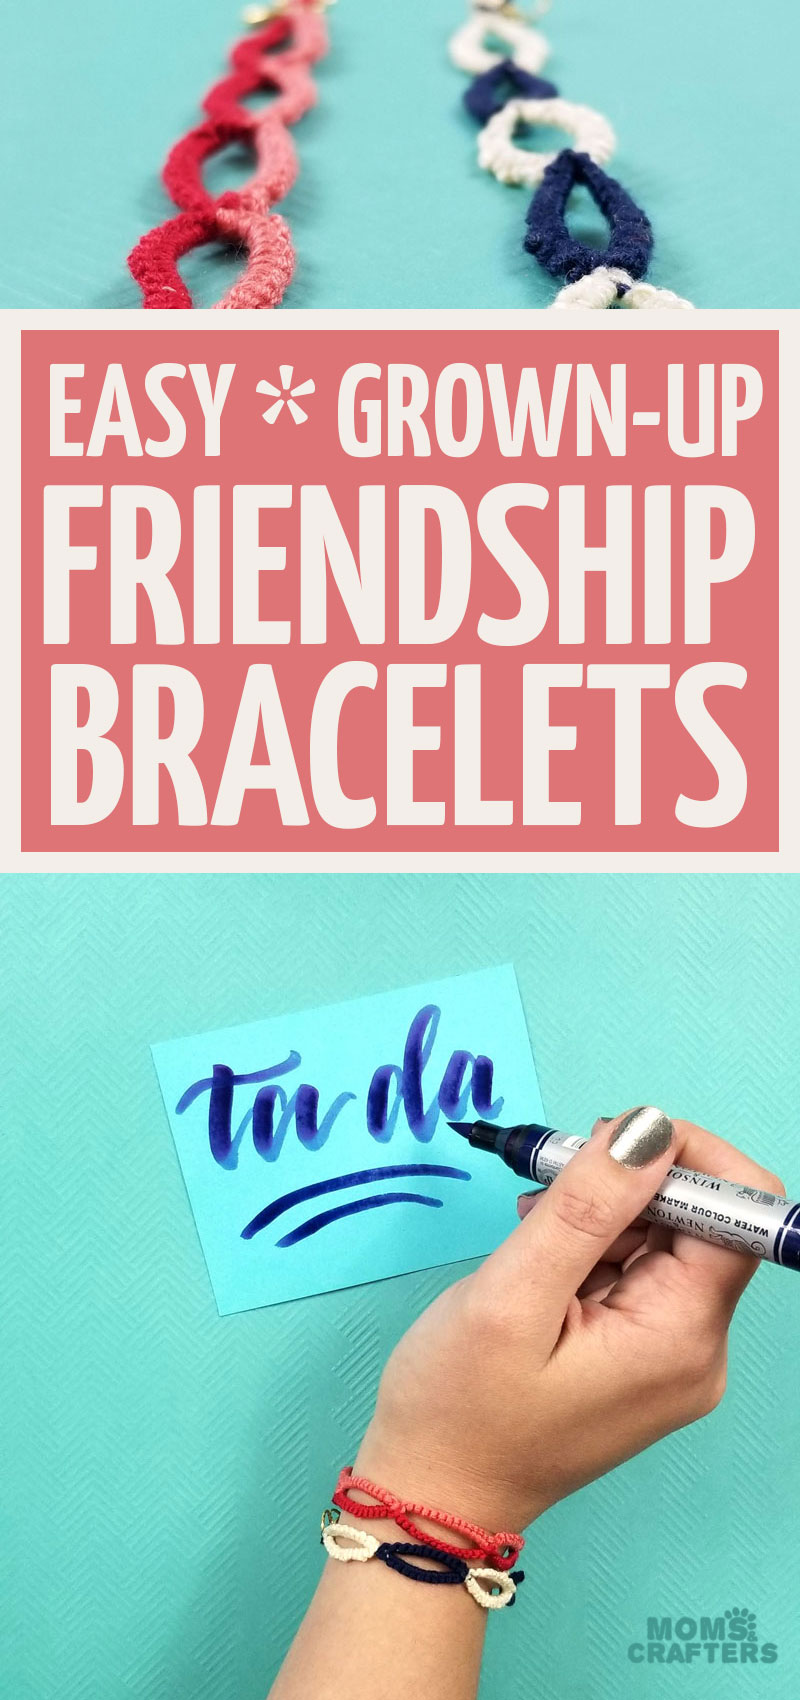 How to Make Friendship Bracelets | Easy Friendship Bracelet Tutorials -  YouTube